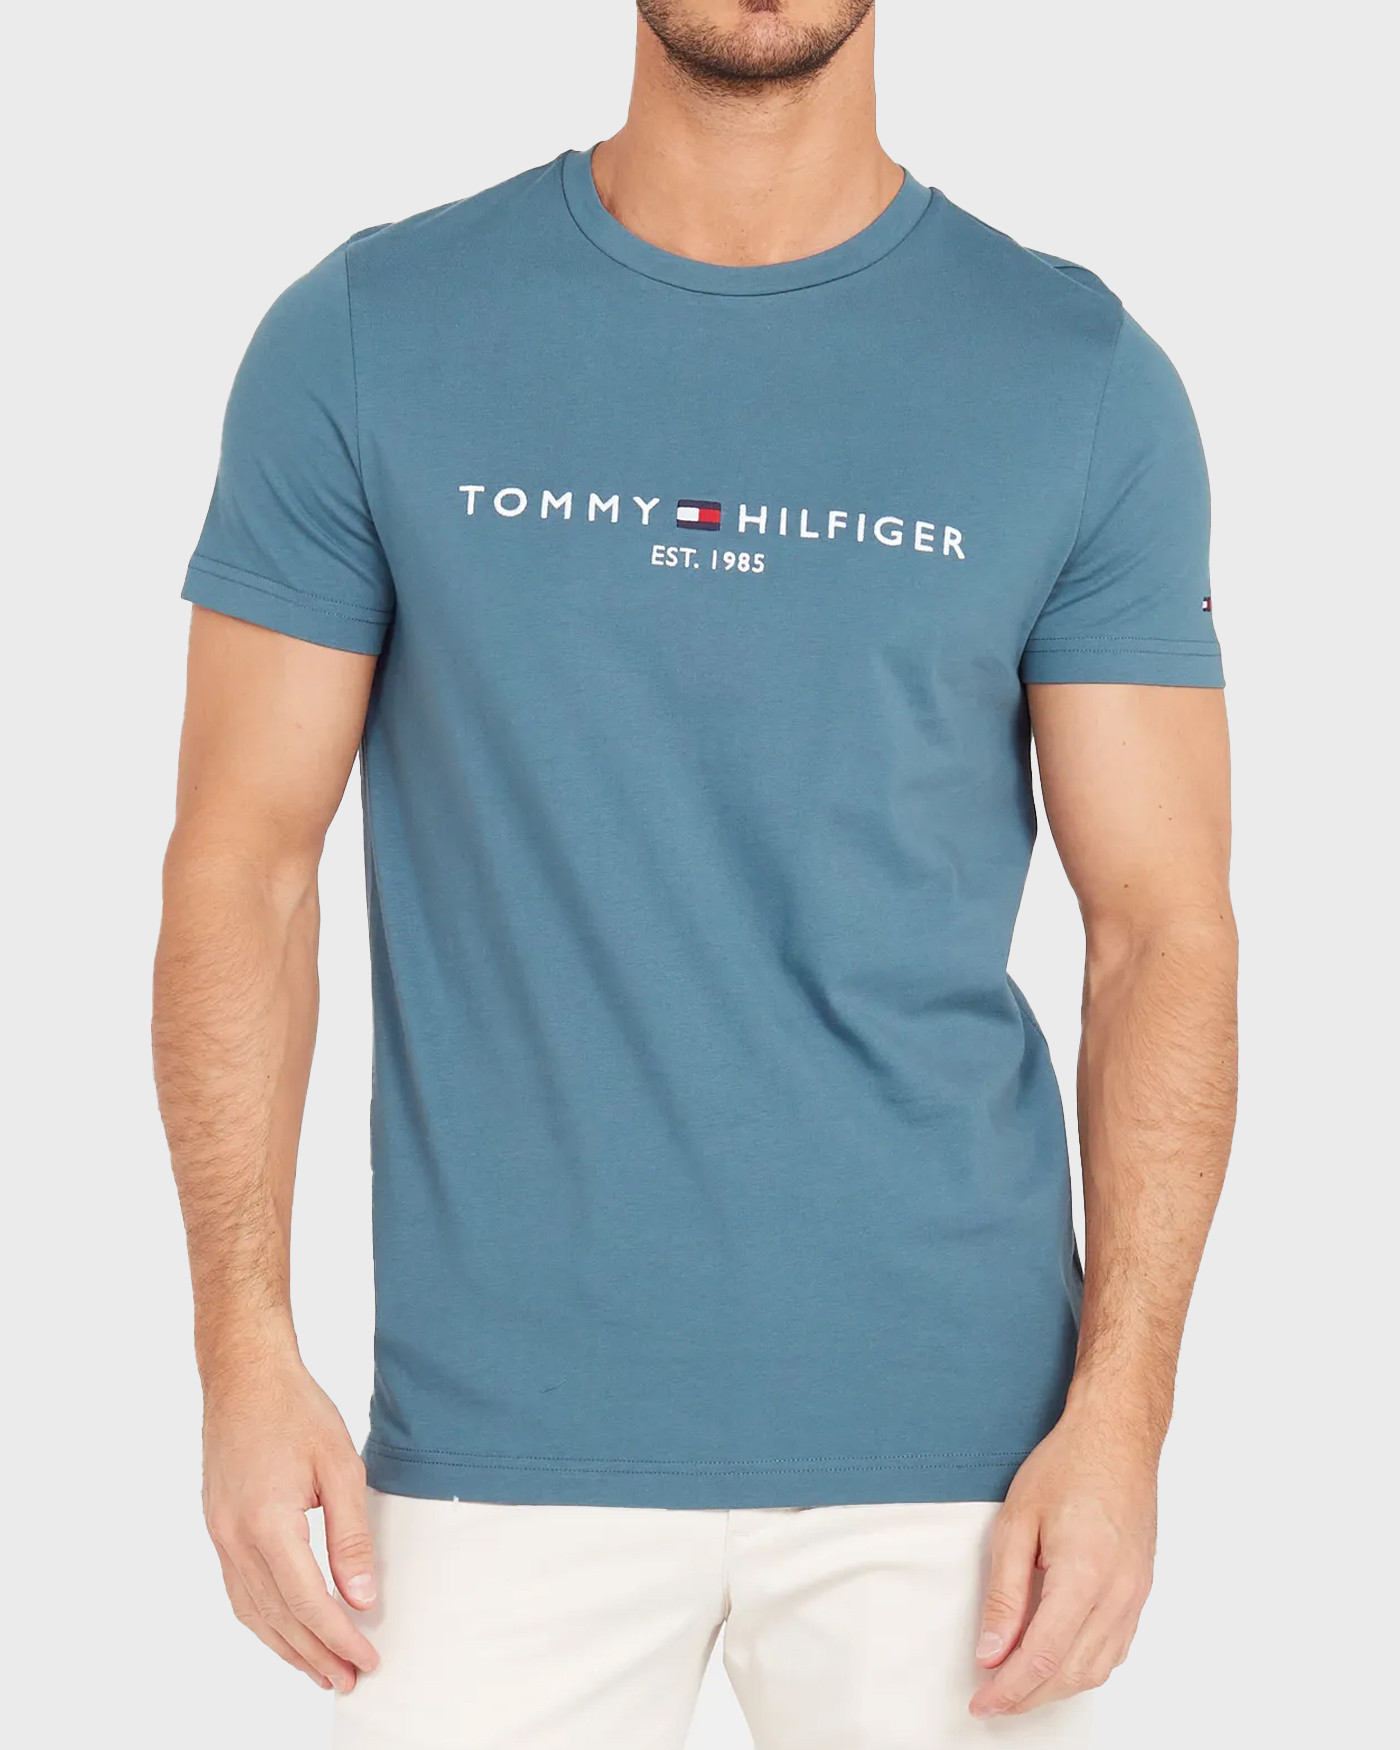 Tommy Hilfiger Men's T-Shirt - MW0MW11797 - sagiakos-stores.gr